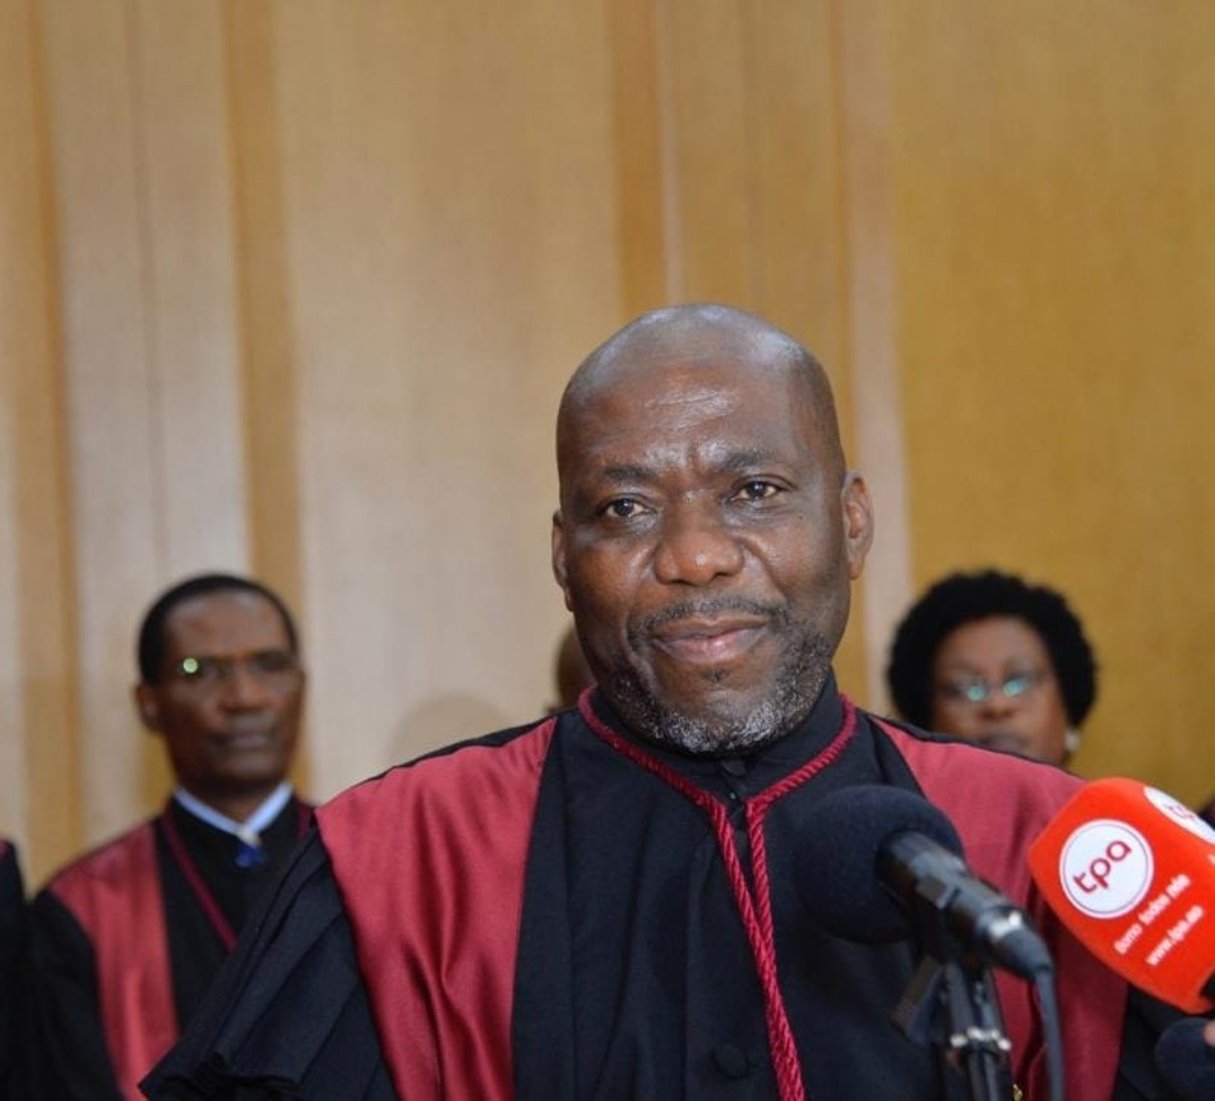 Joel Leonardo, président du Tribunal suprême, à Luanda © Tribunal supremo (Angola)